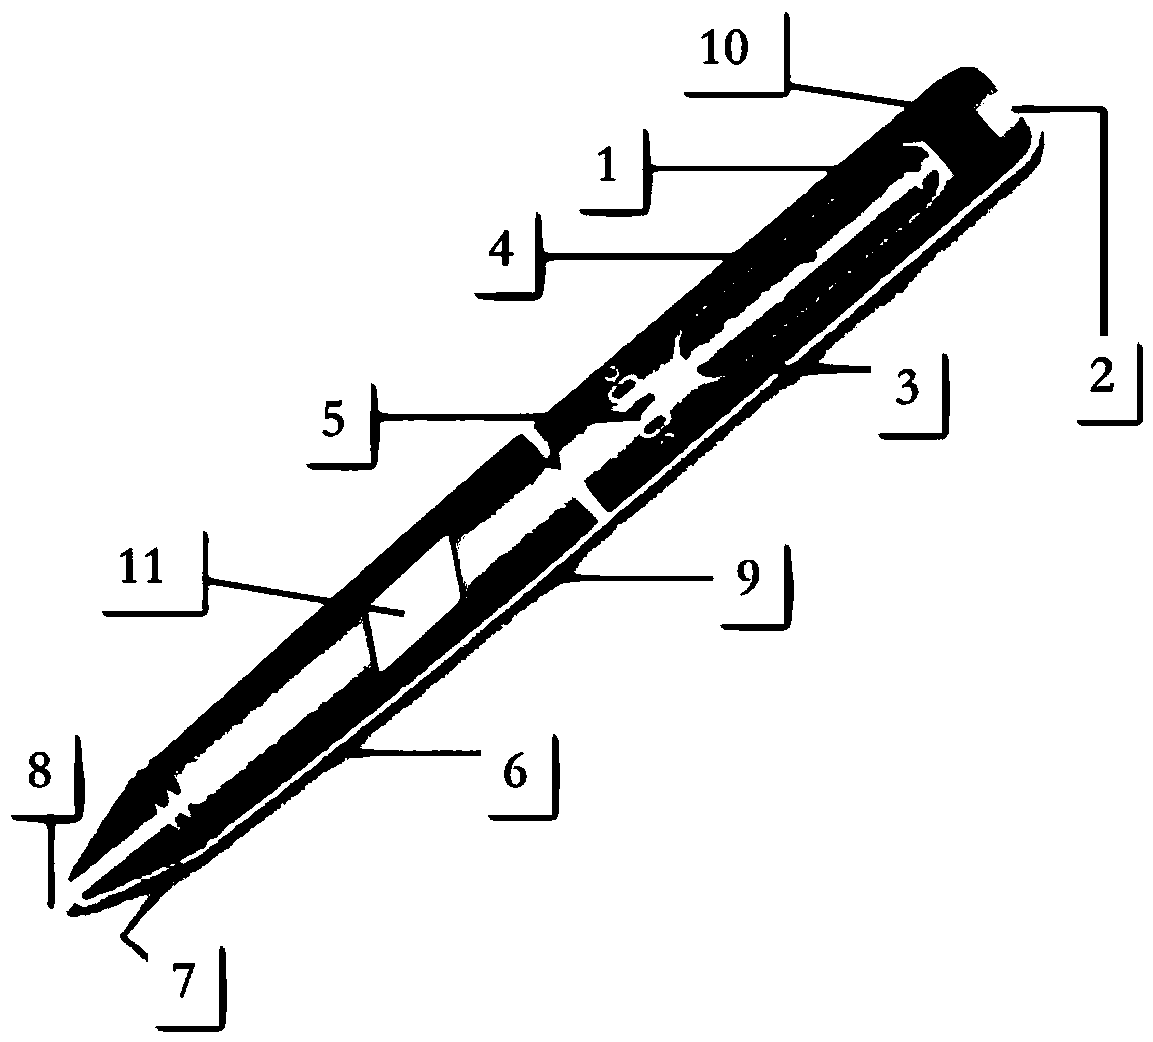 Answering method based on smart pen